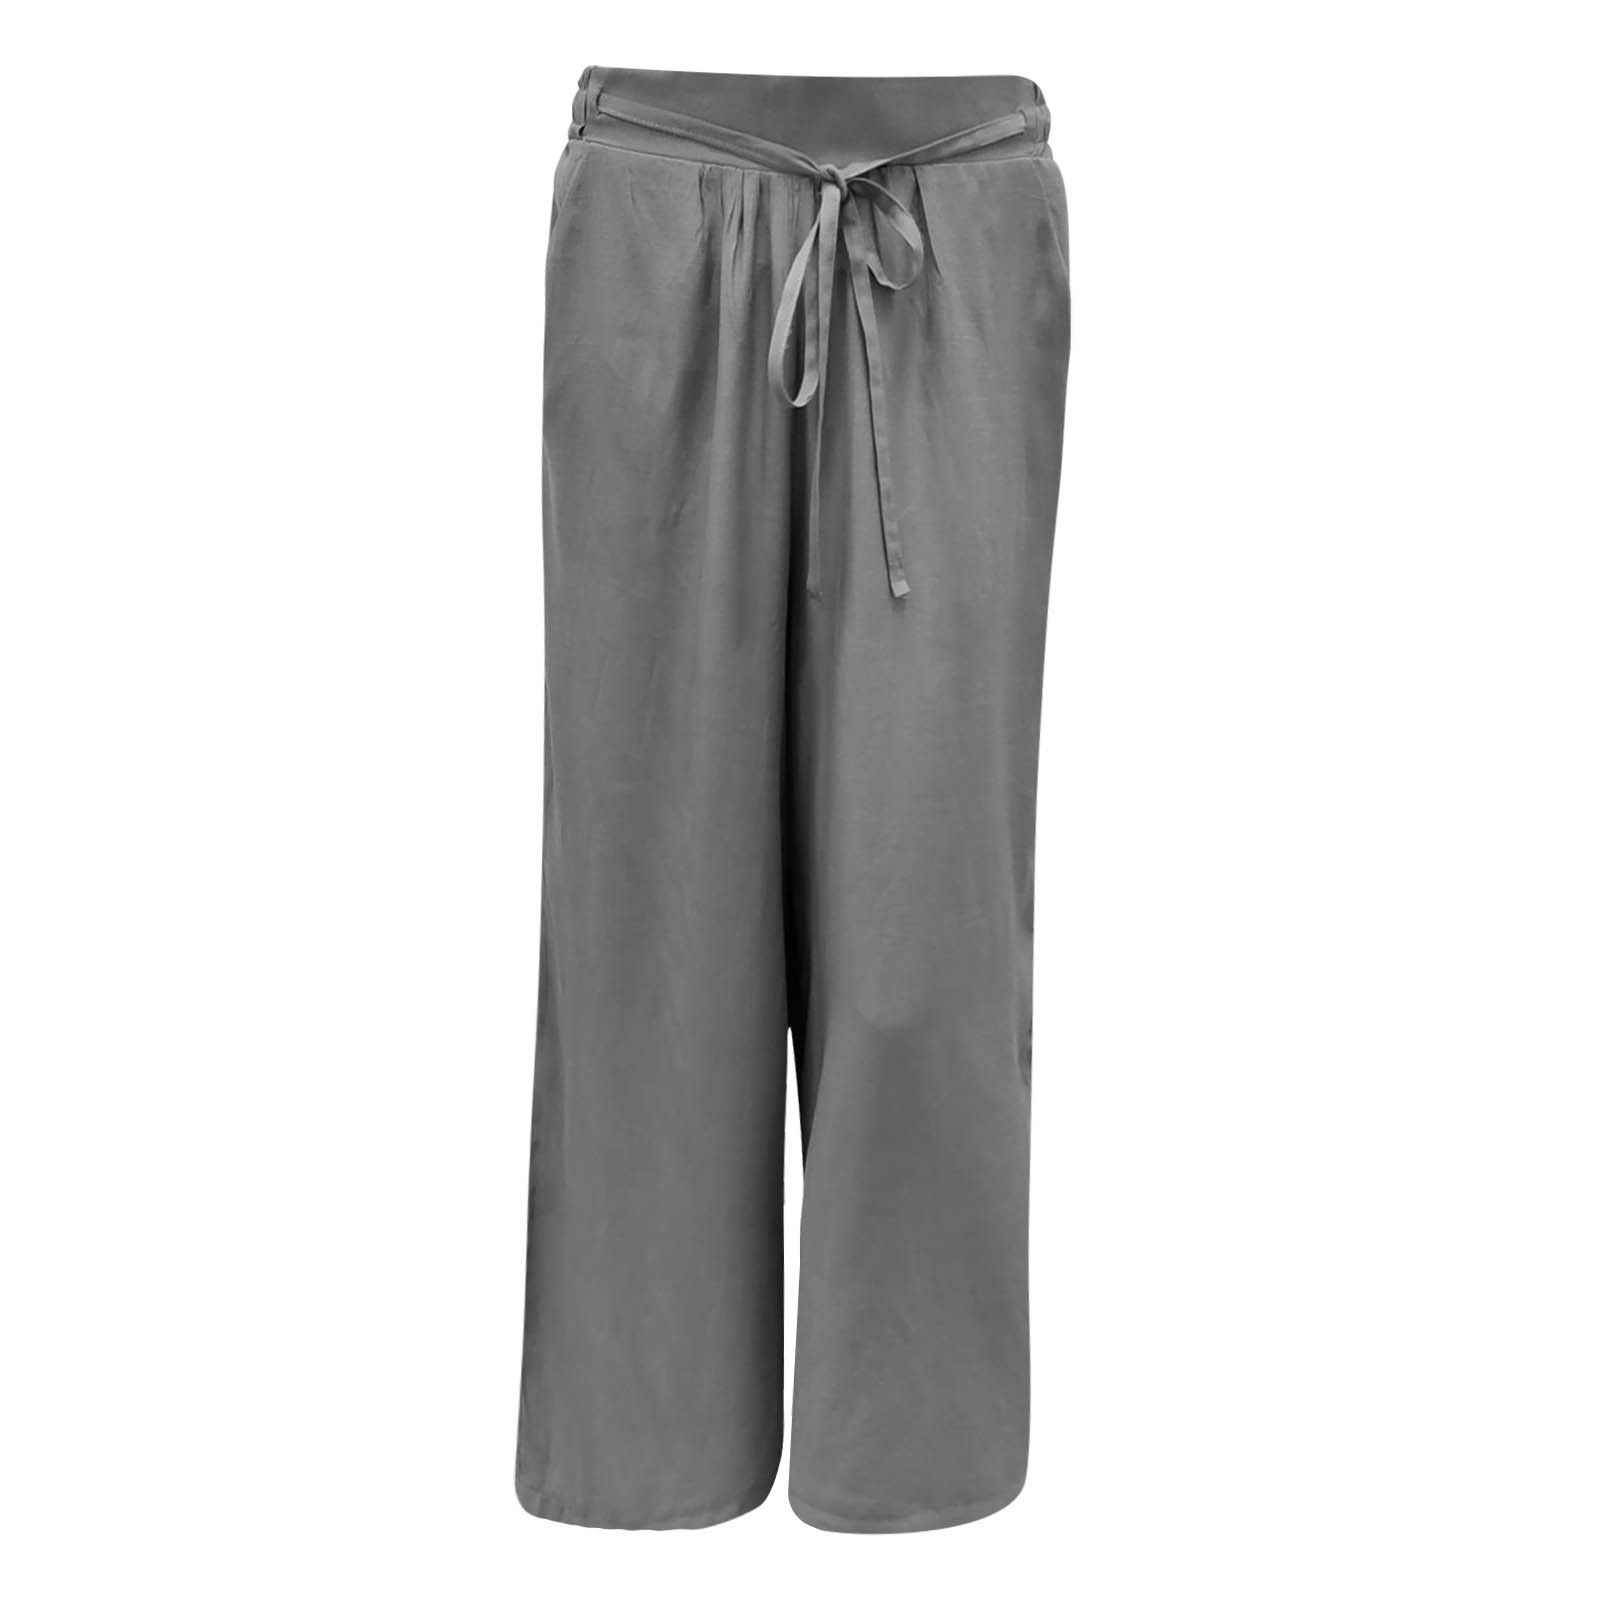 Lghxlxry Women's Casual Flowy Palazzo Pants Elastic Waist Wide Leg Loose Summer  Trousers with Pocket, 3003 Grey, 3X-Large price in Saudi Arabia,   Saudi Arabia